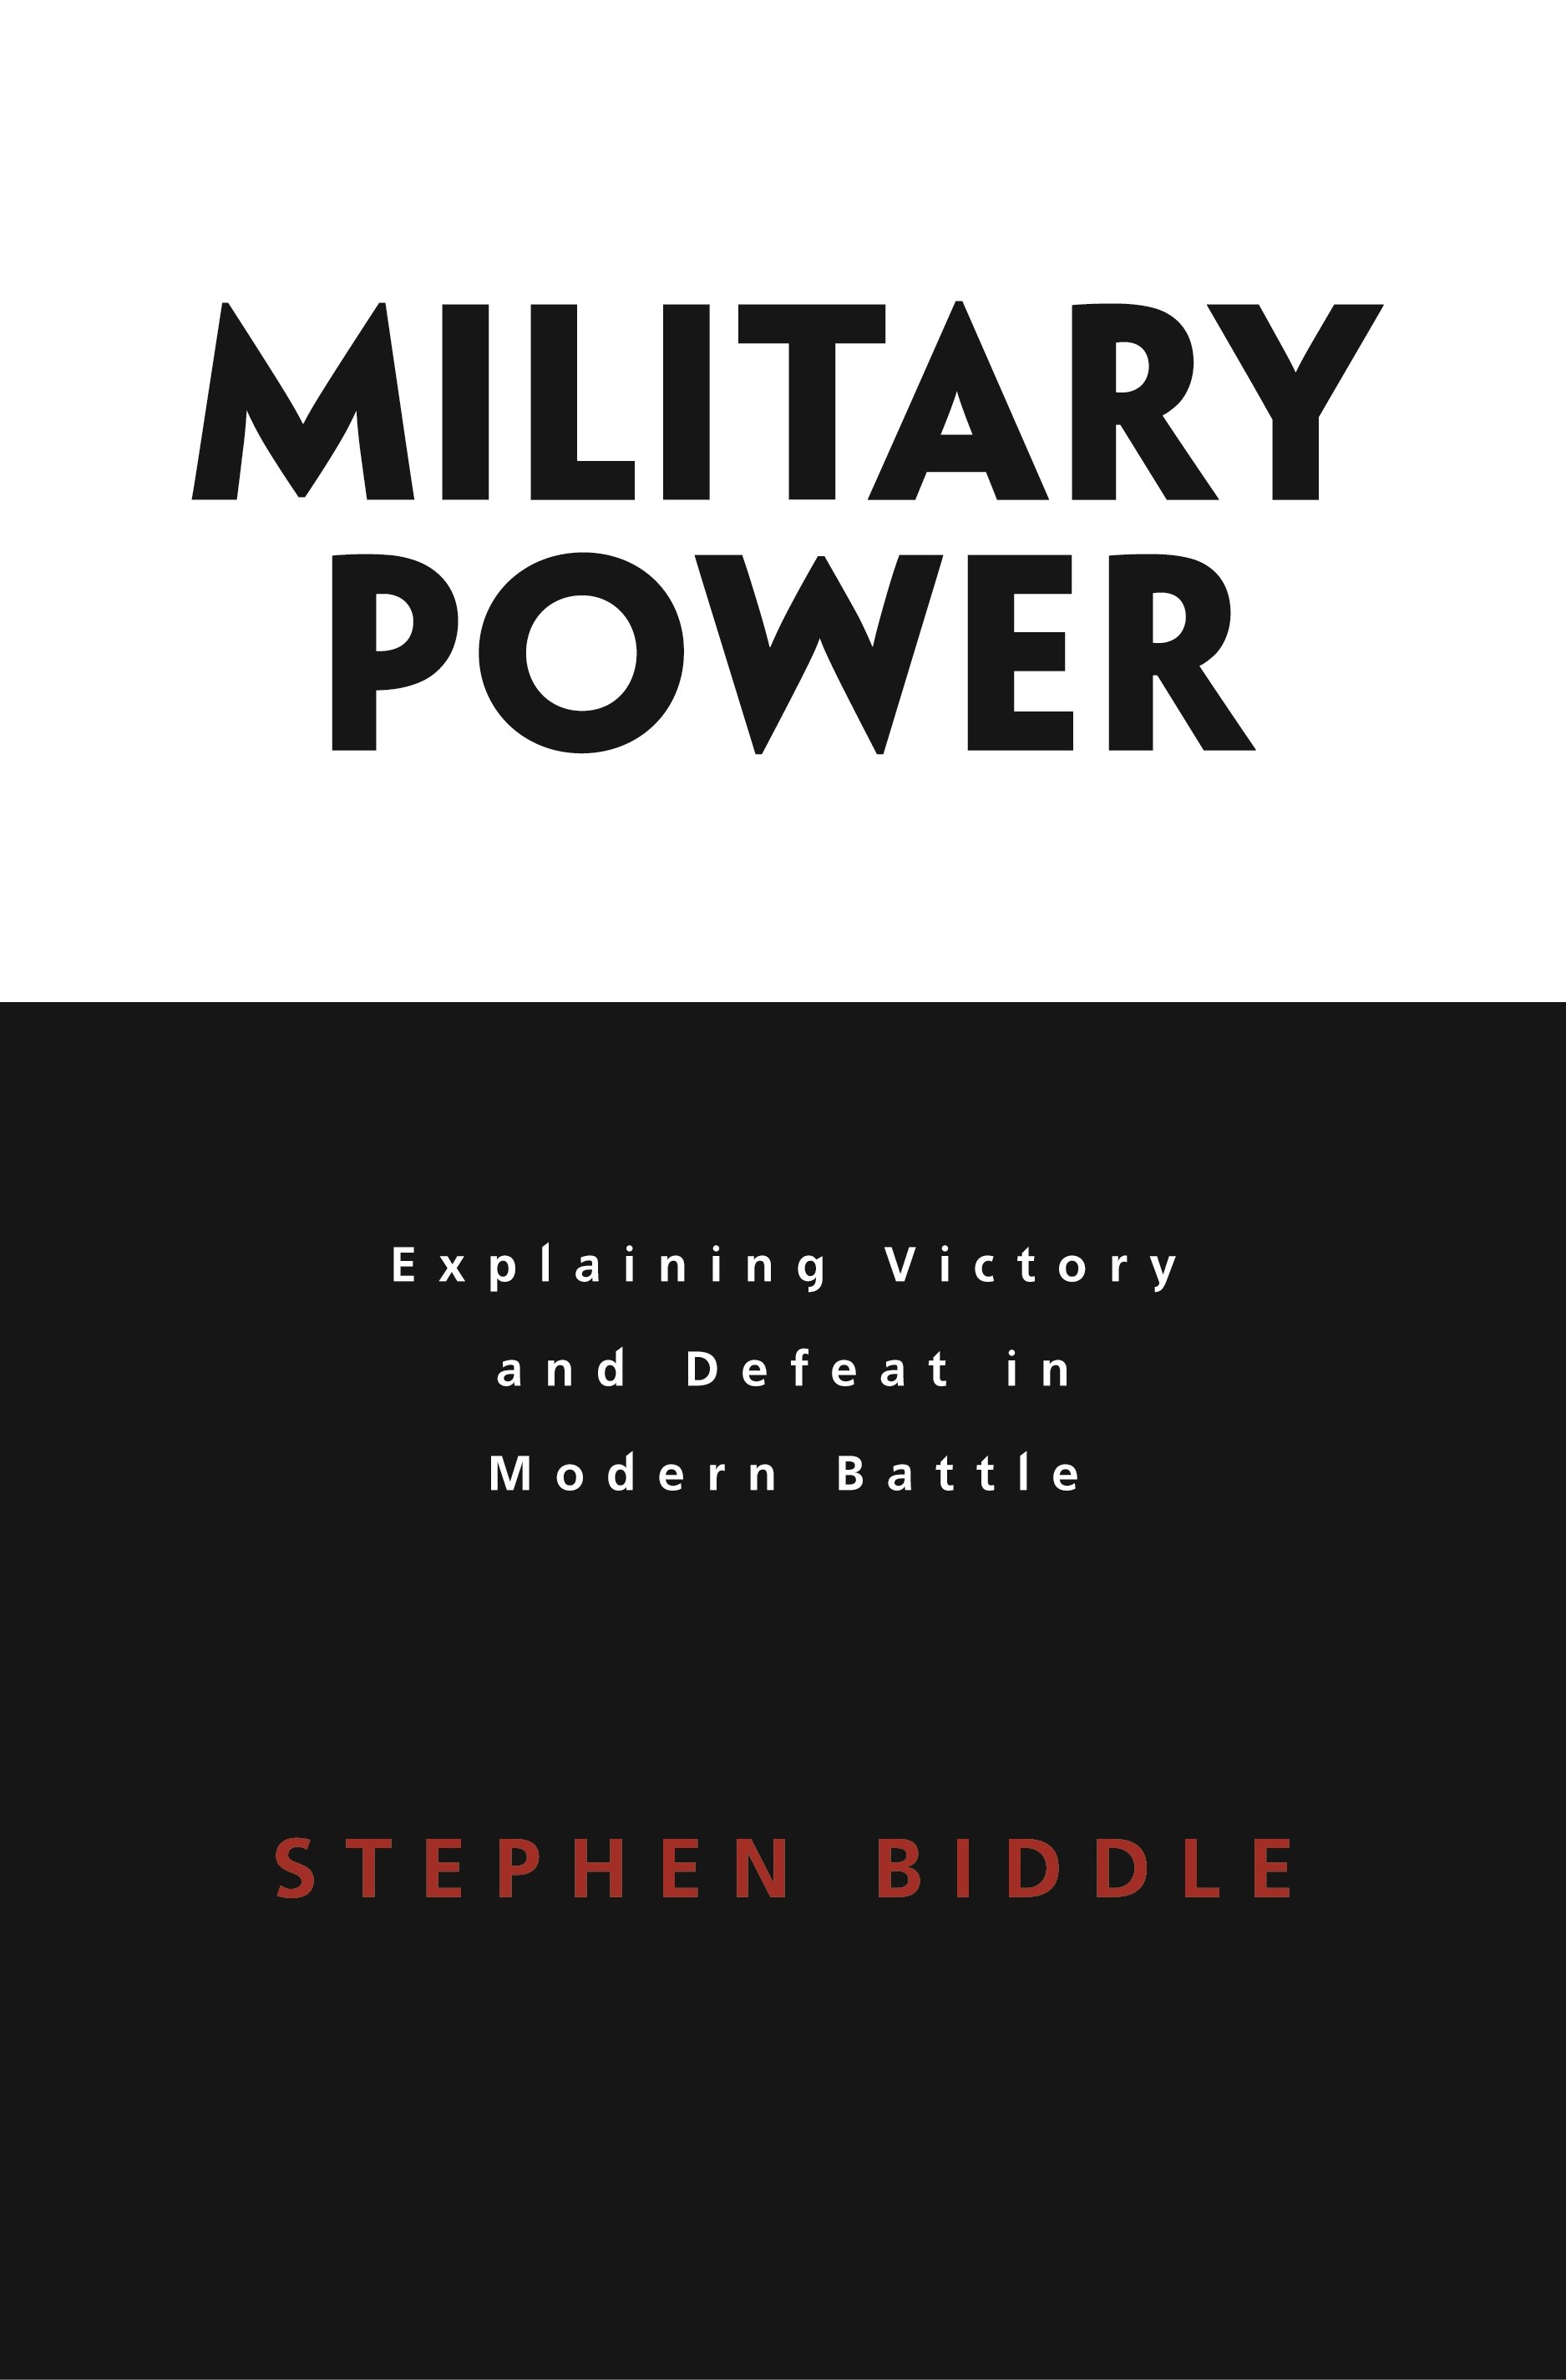 University　Military　Press　Power　Princeton